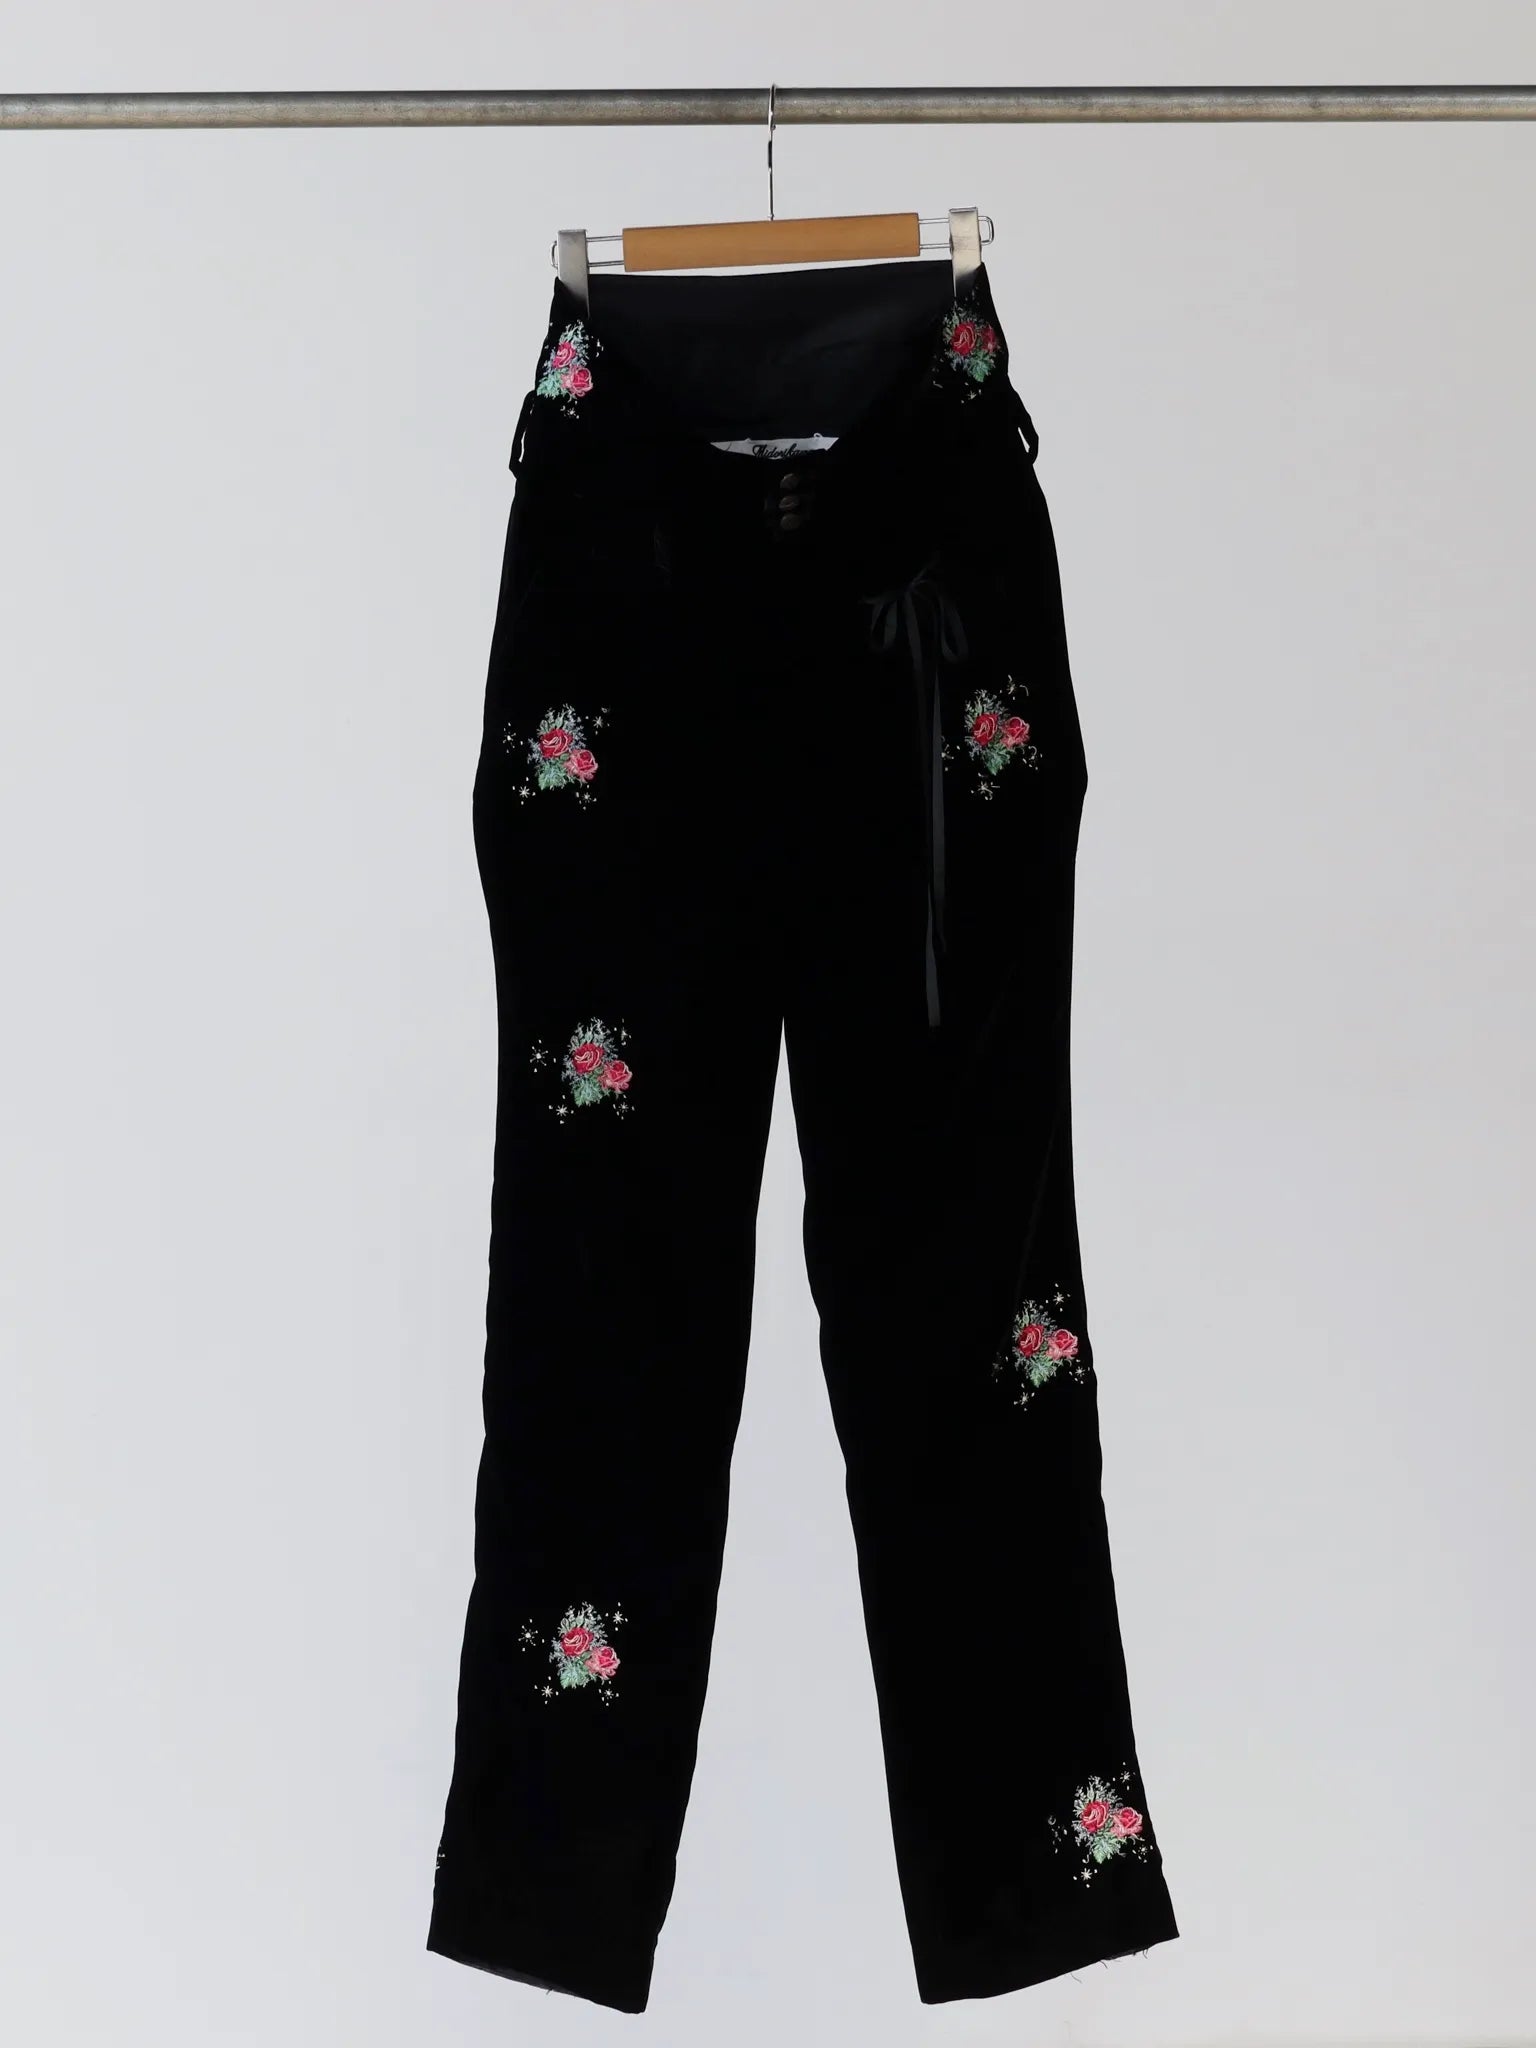 midorikawa-velvet-embroidery-pants-black-embroidery-1